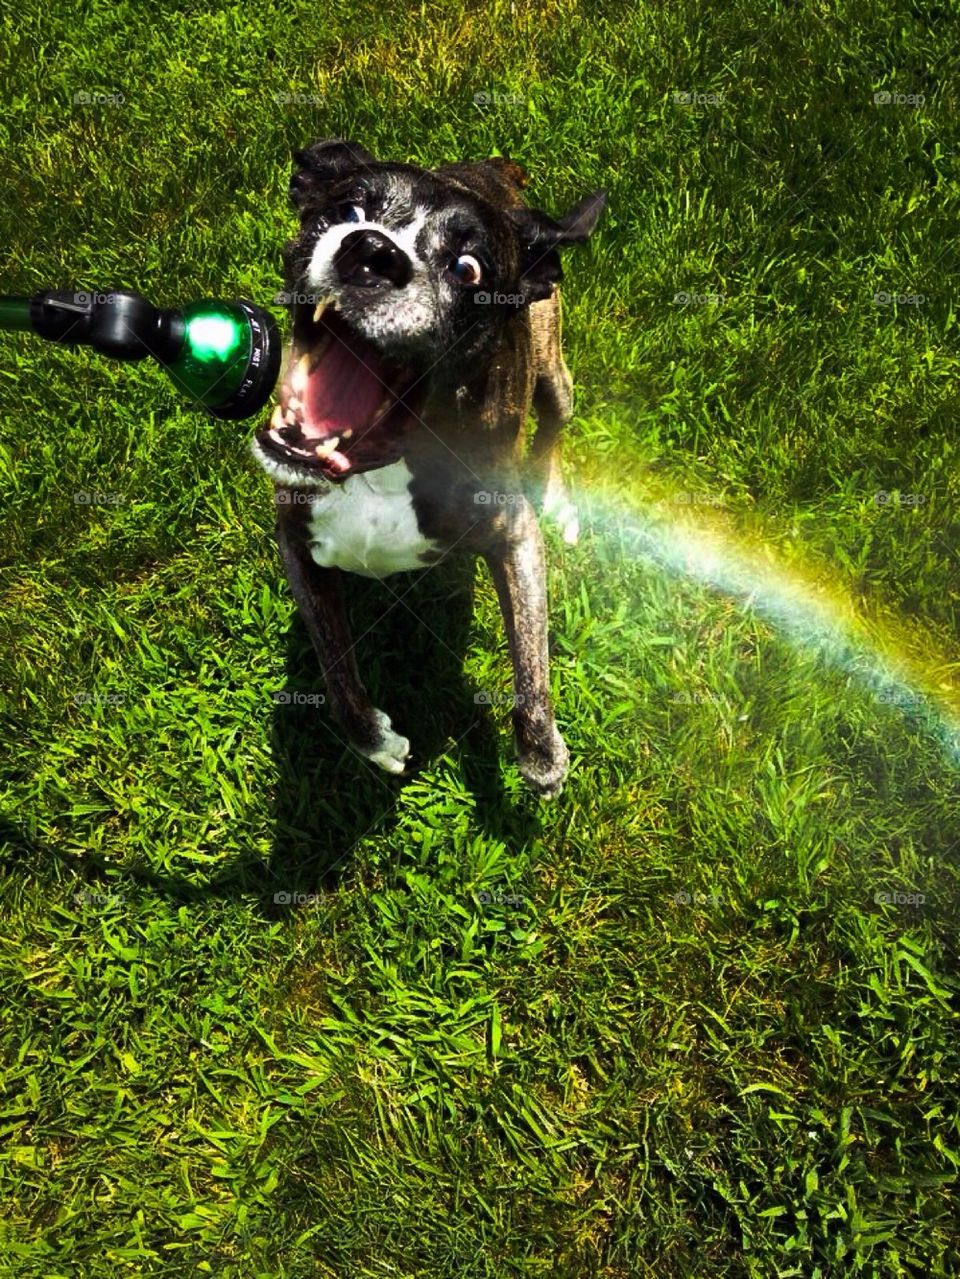 Rainbow Chaser